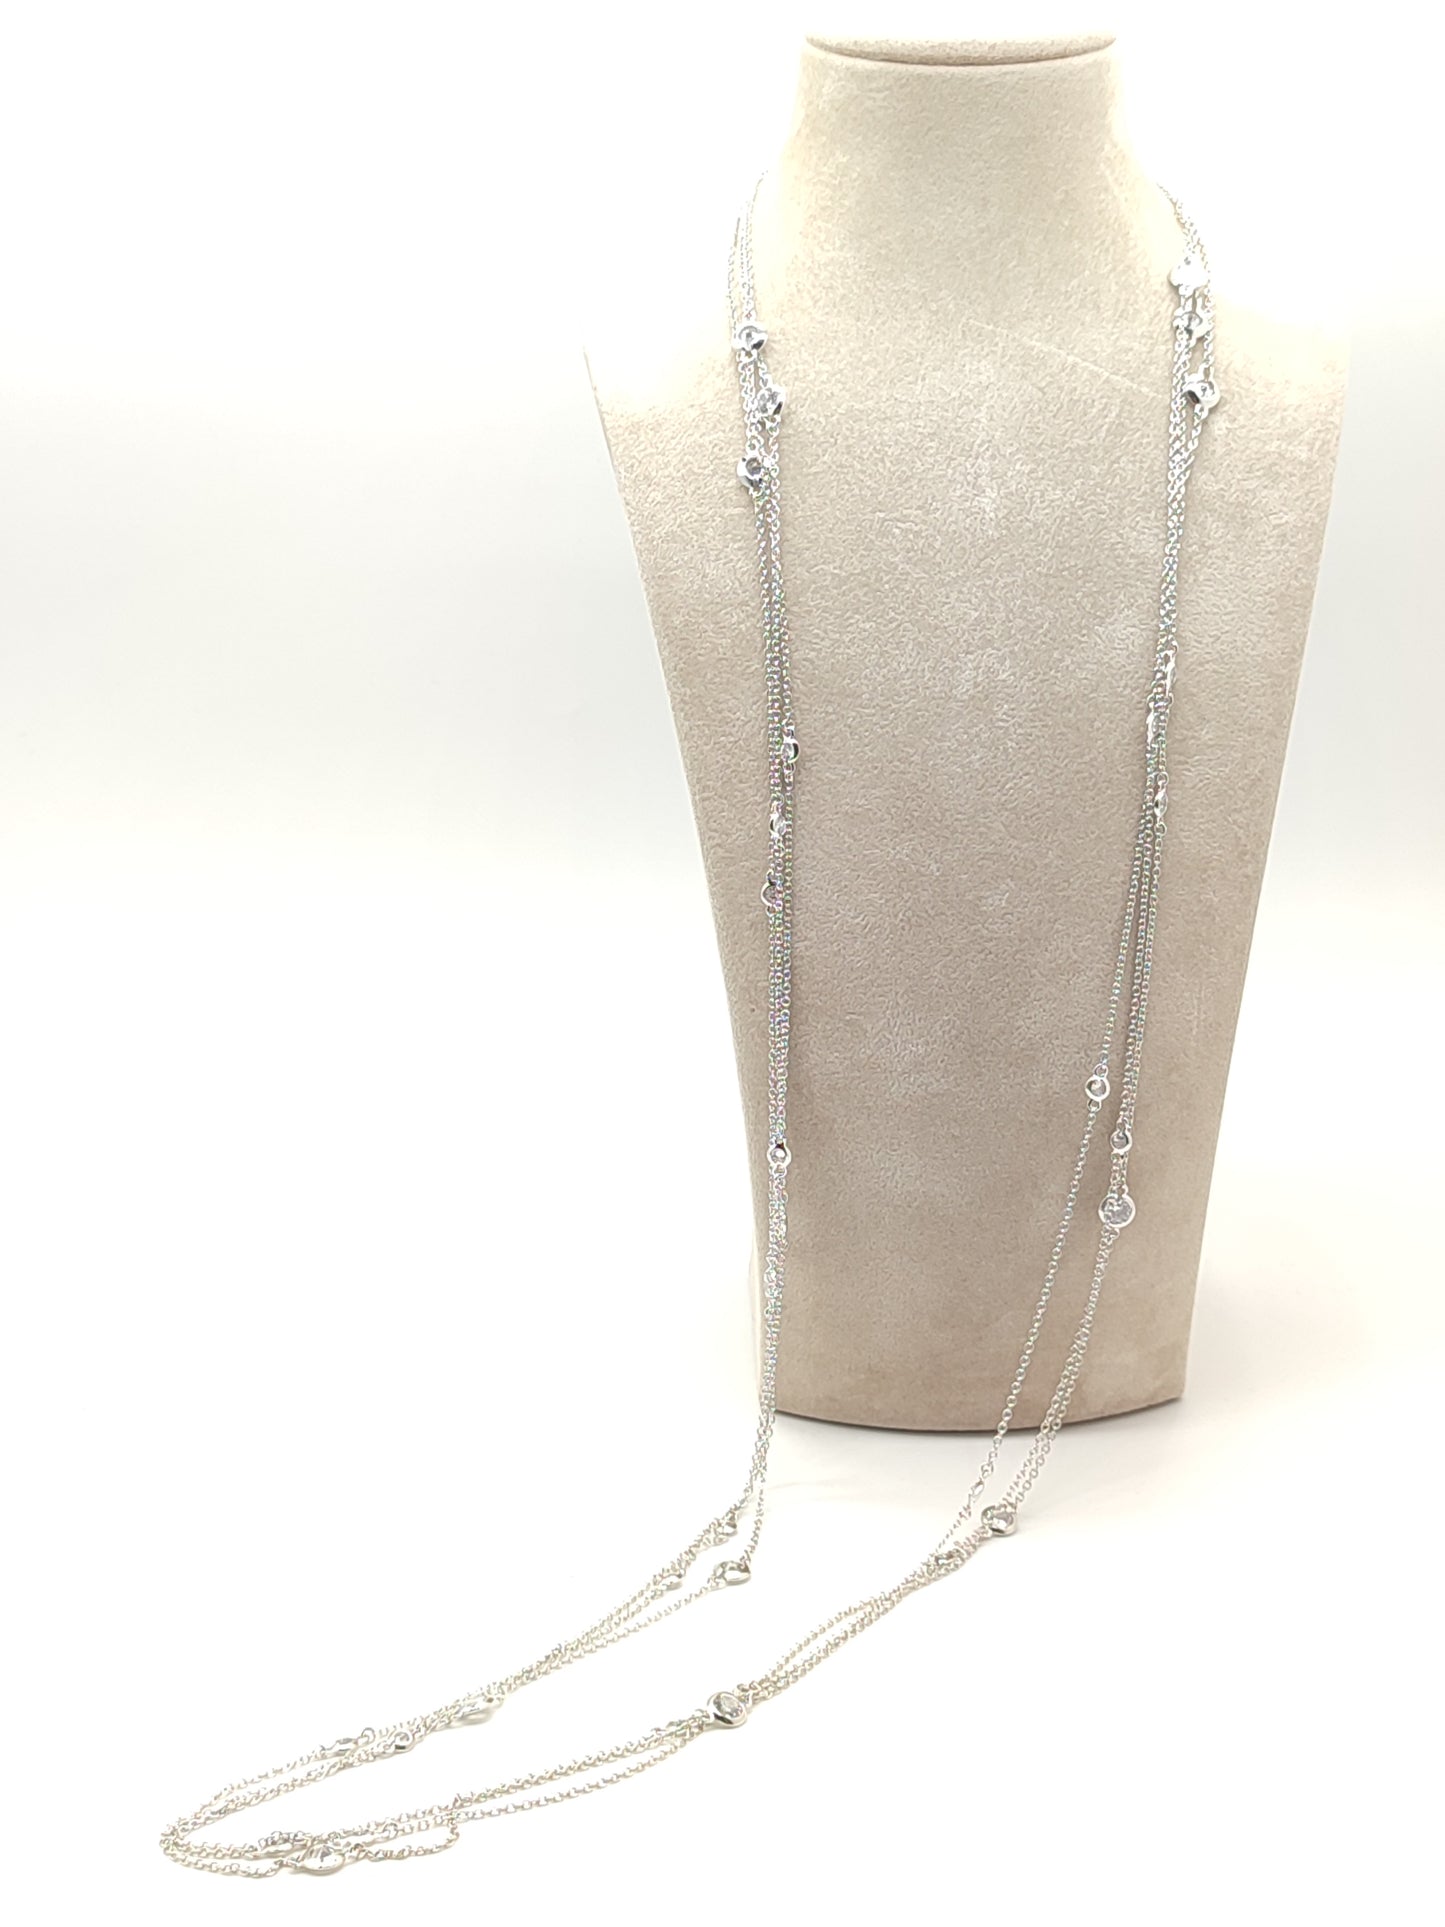 Collana lunga in argento con zirconi 3 fili